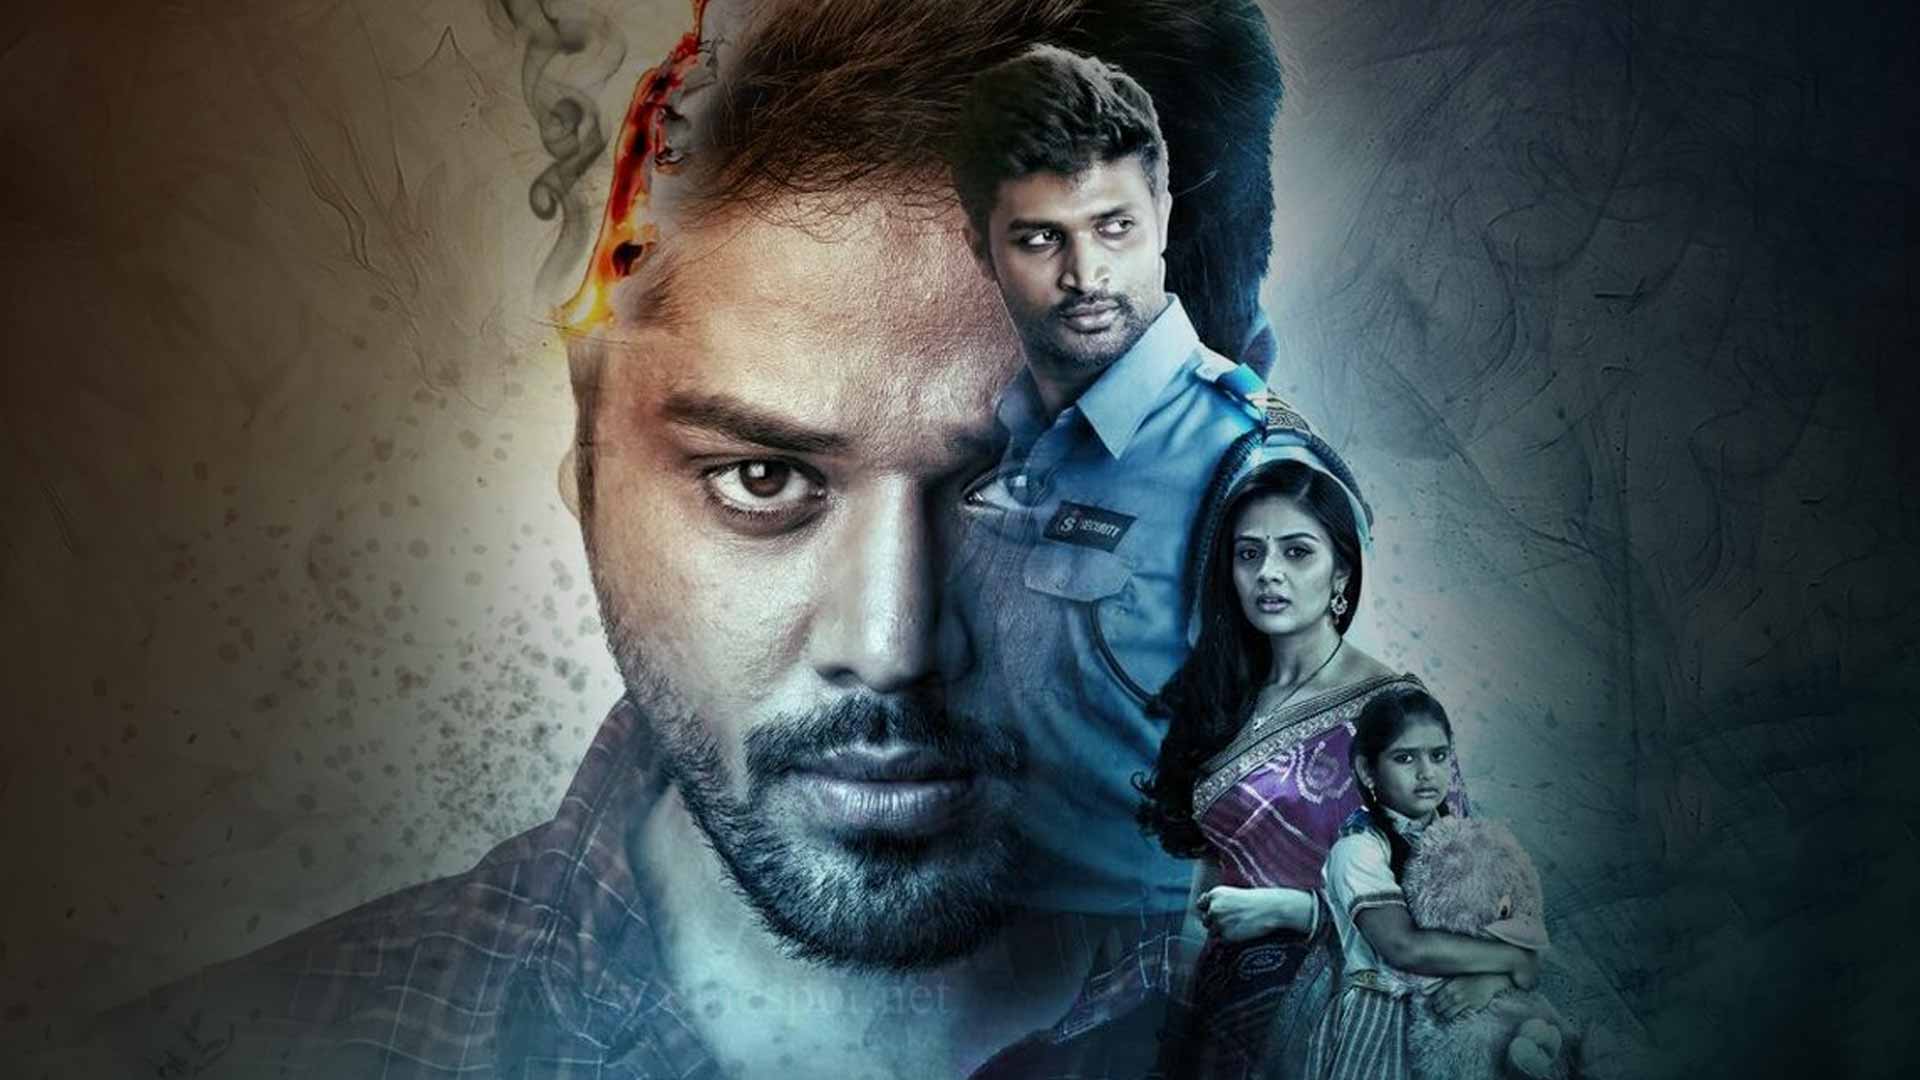 premam full movie download in tamil dubbed hd